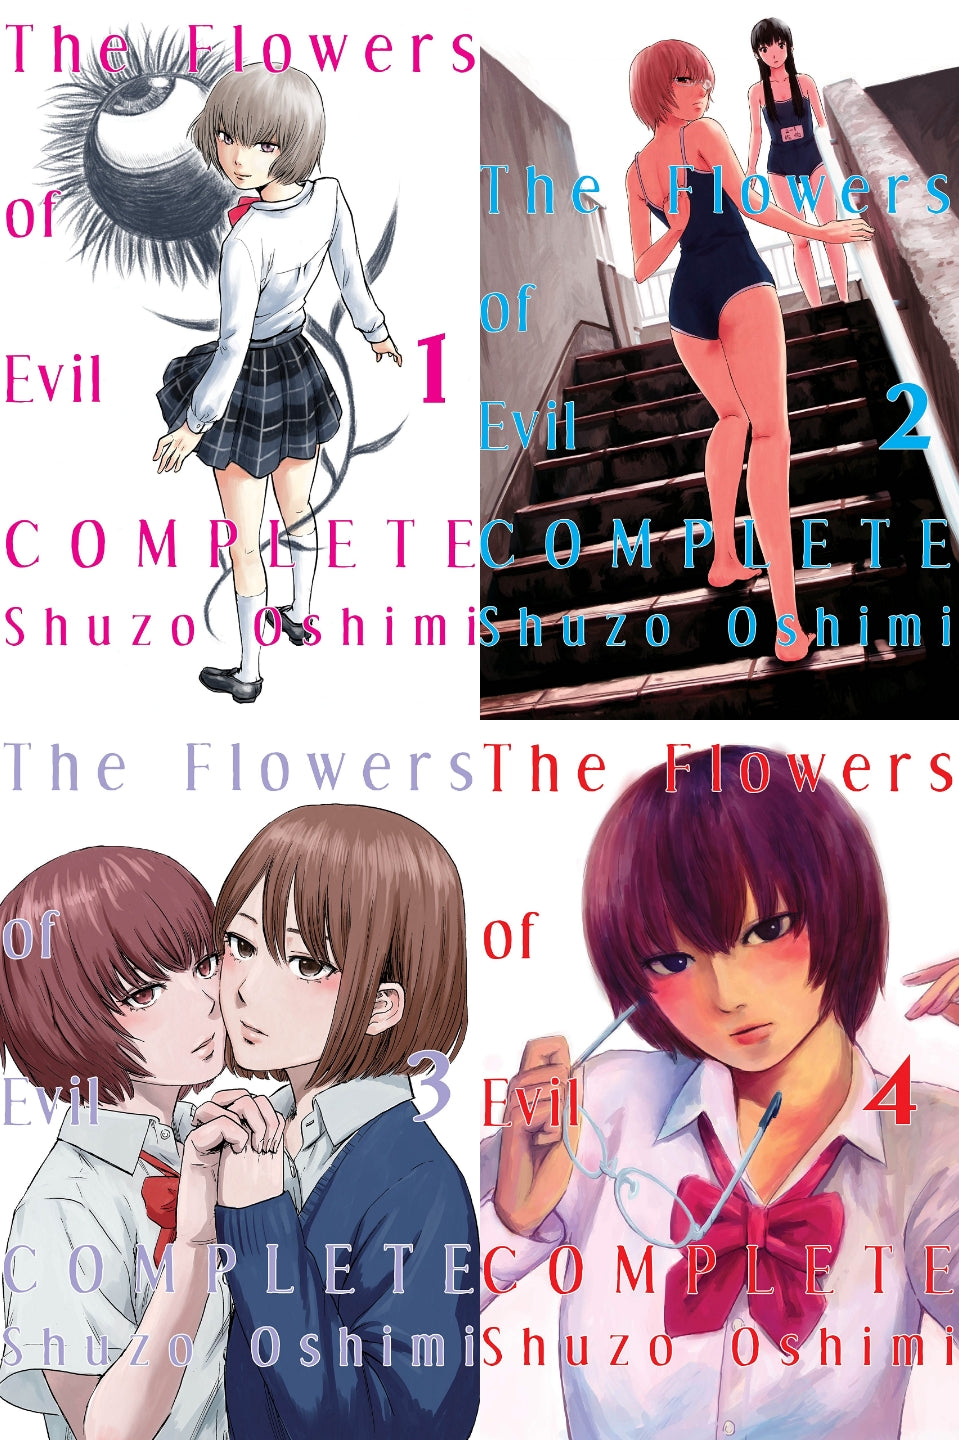 The Flowers of Evil - Complete Full Set (1-4)